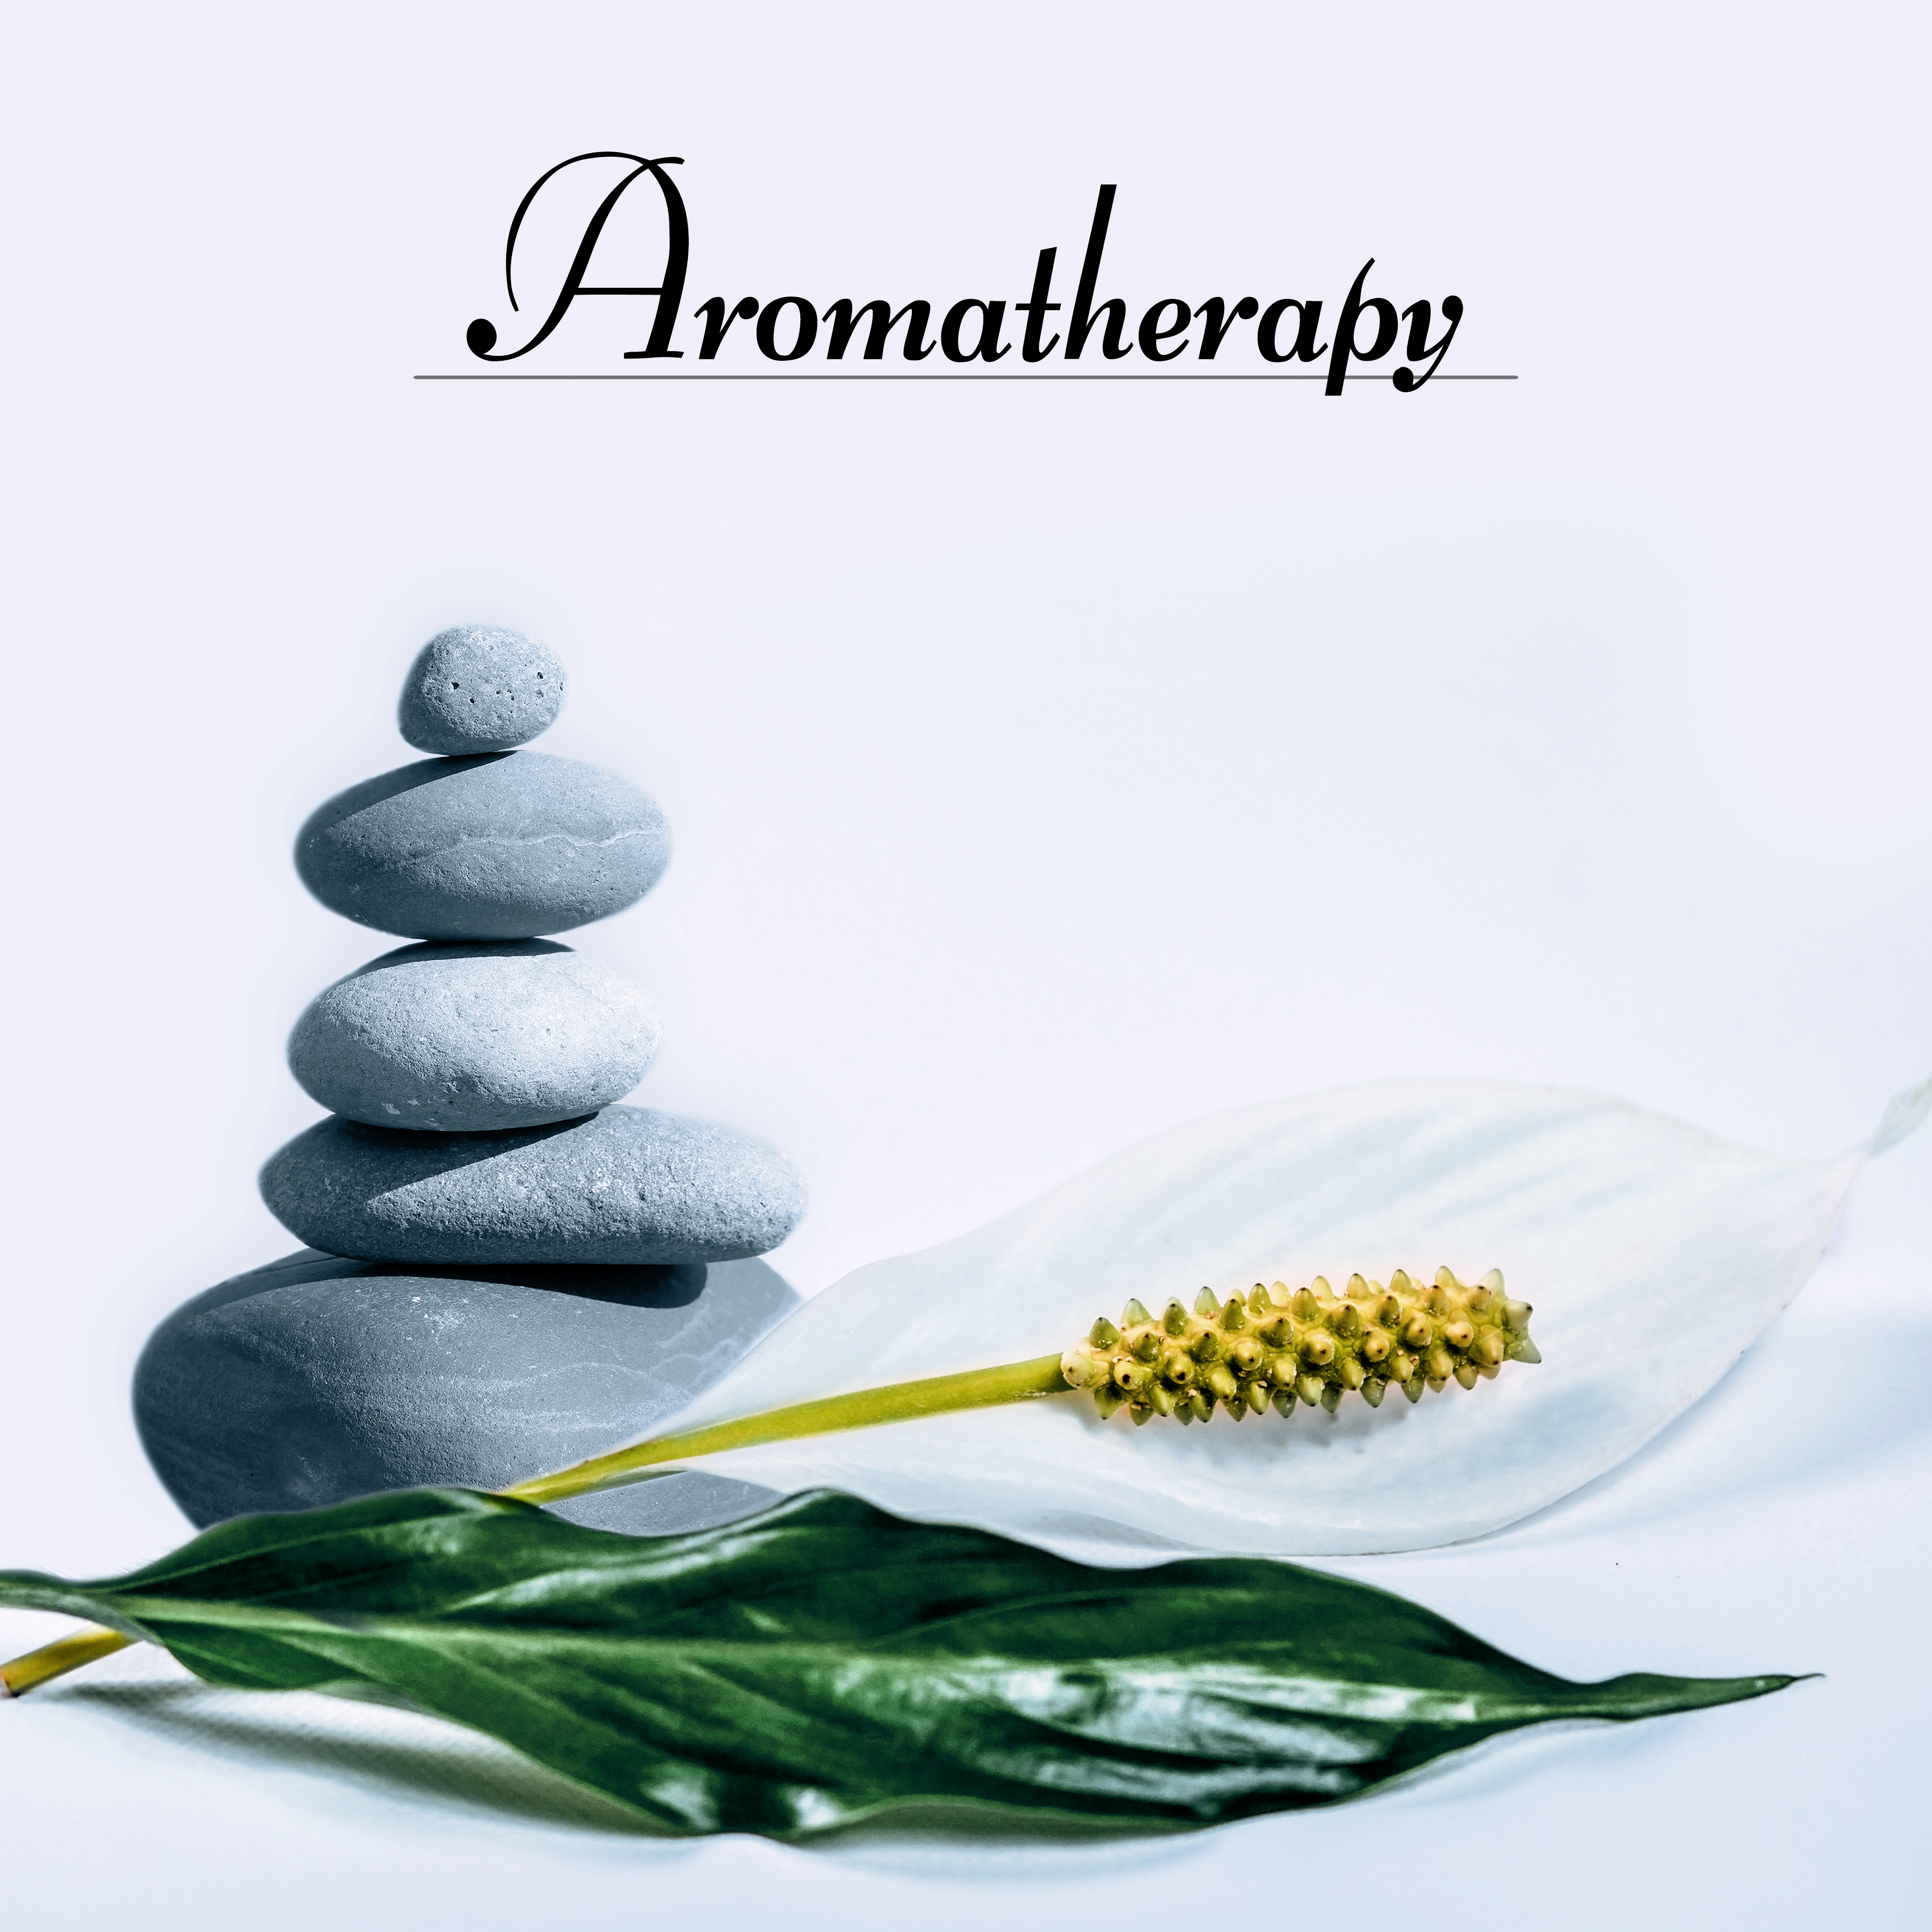 Aromatherapy - Spirituality, Morning Prayer, Mantras, Relaxation, Pranayama, Sleep Meditation, Yoga & Wellness